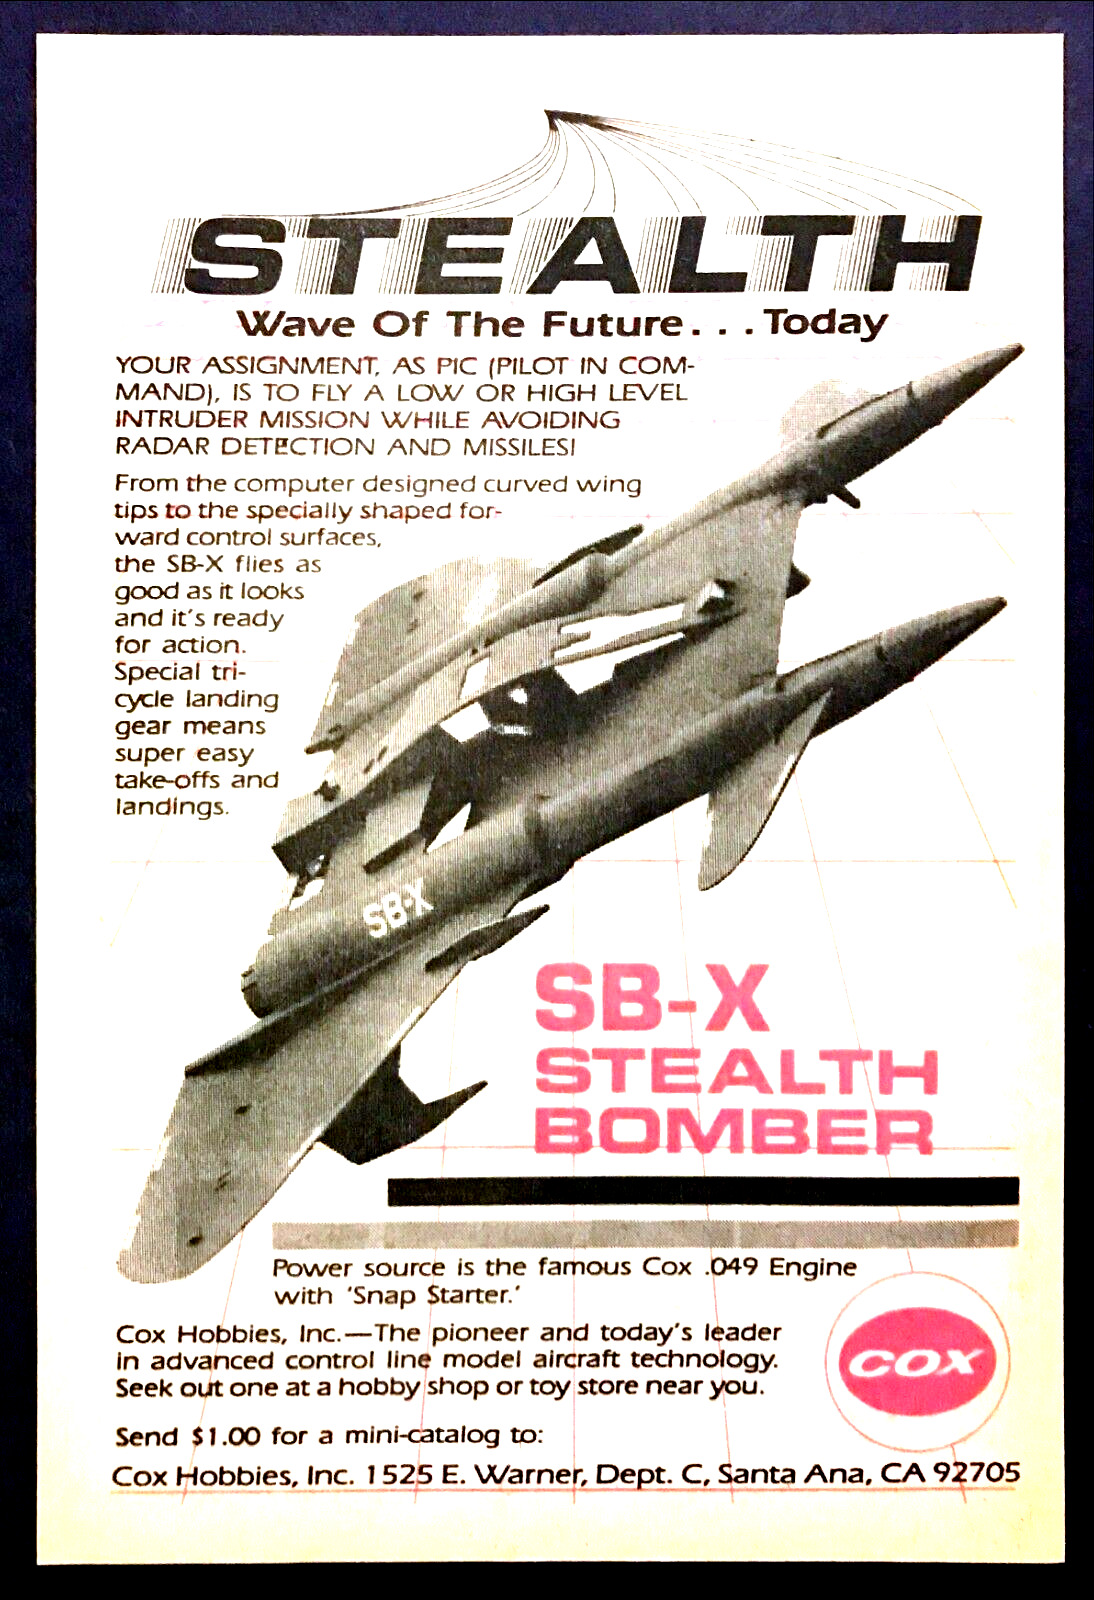 1987 Cox SB-X Stealth Bomber Gas-Powered Jet Plane photo vintage print ad